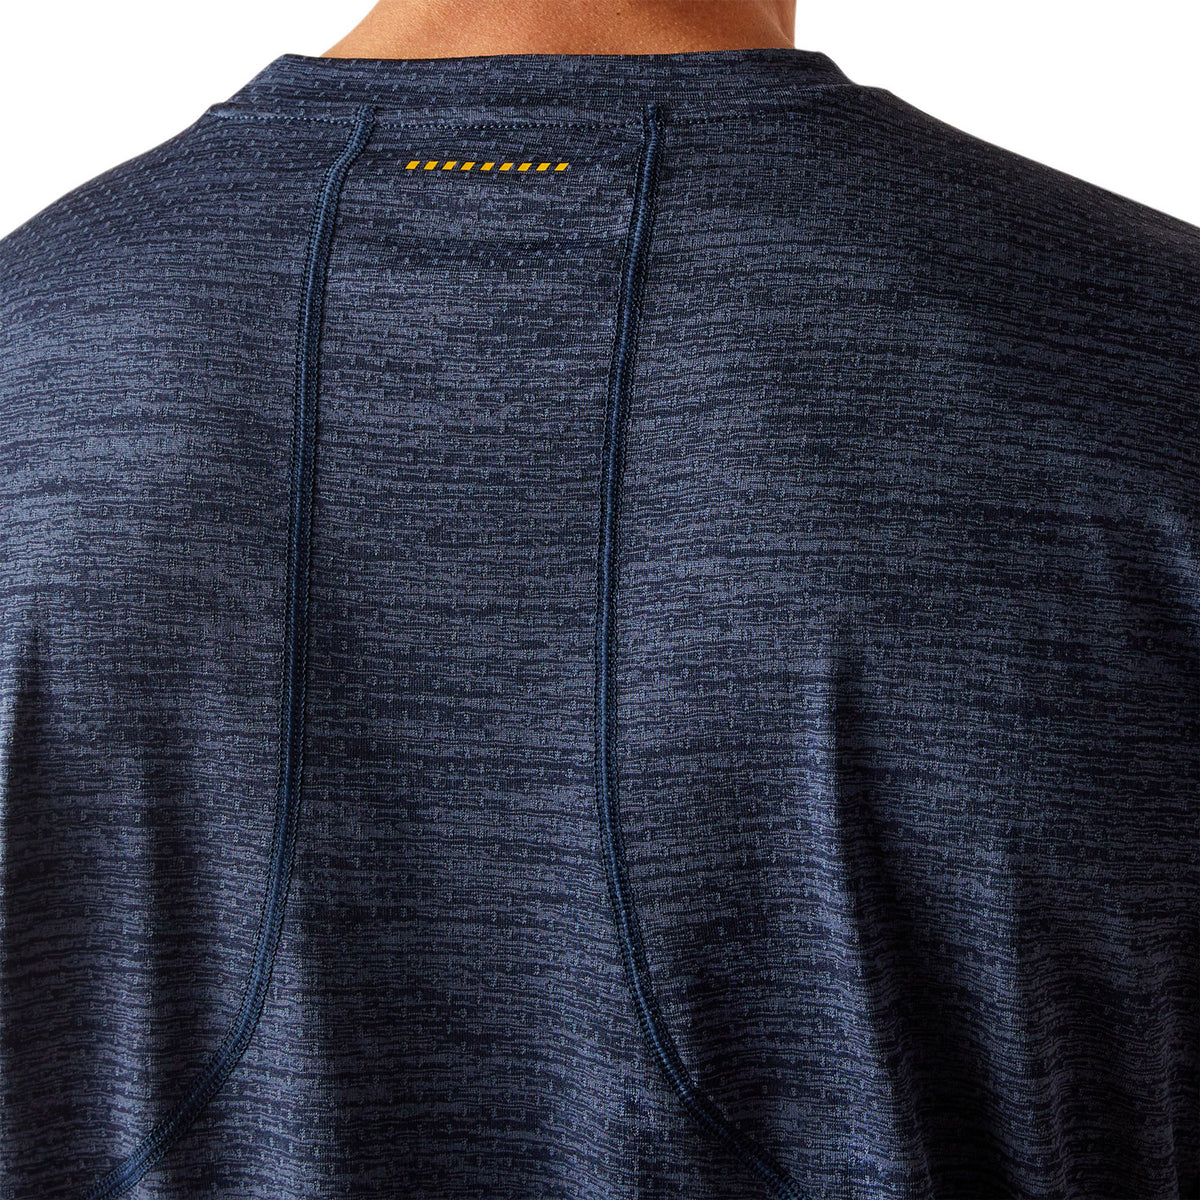 Ariat Men&#39;s Rebar Evolution Athletic Fit Short Sleeve T-Shirt - Work World - Workwear, Work Boots, Safety Gear